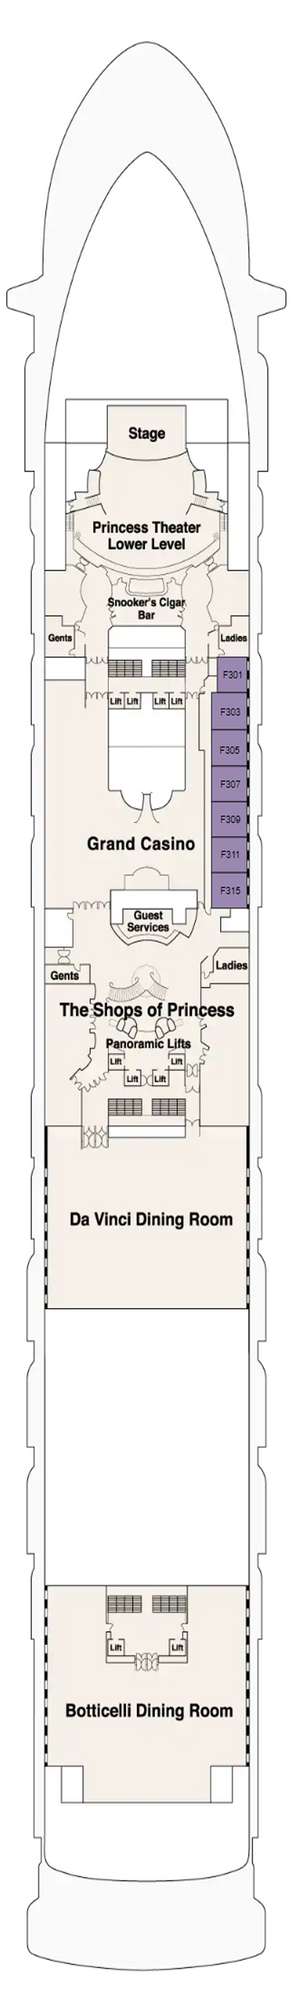 Deck plan for Grand Princess